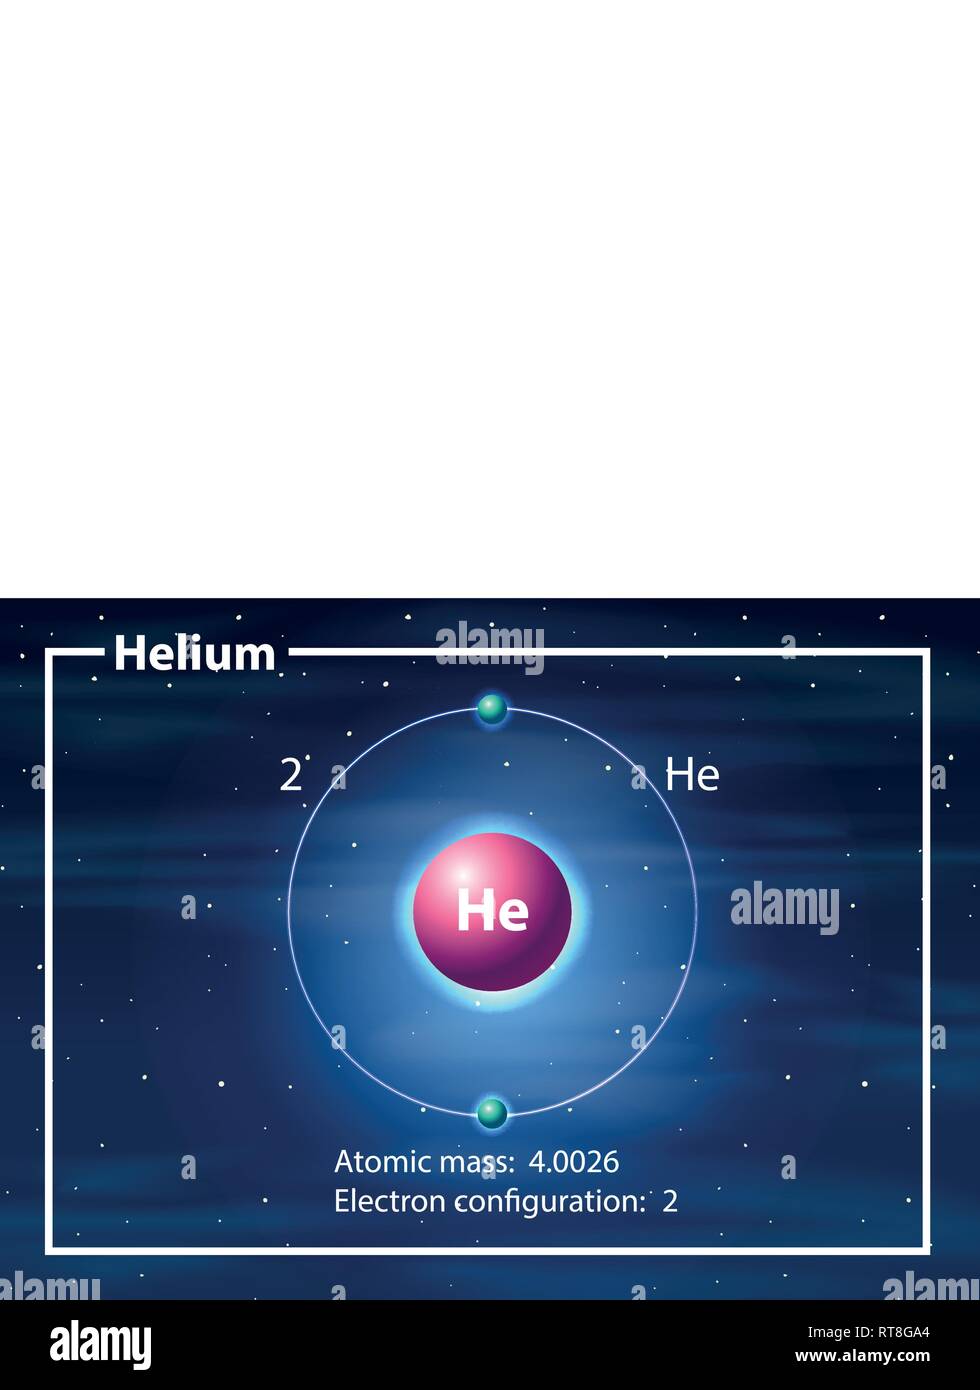 Helium atom Diagramm Konzept Abbildung Stock Vektor